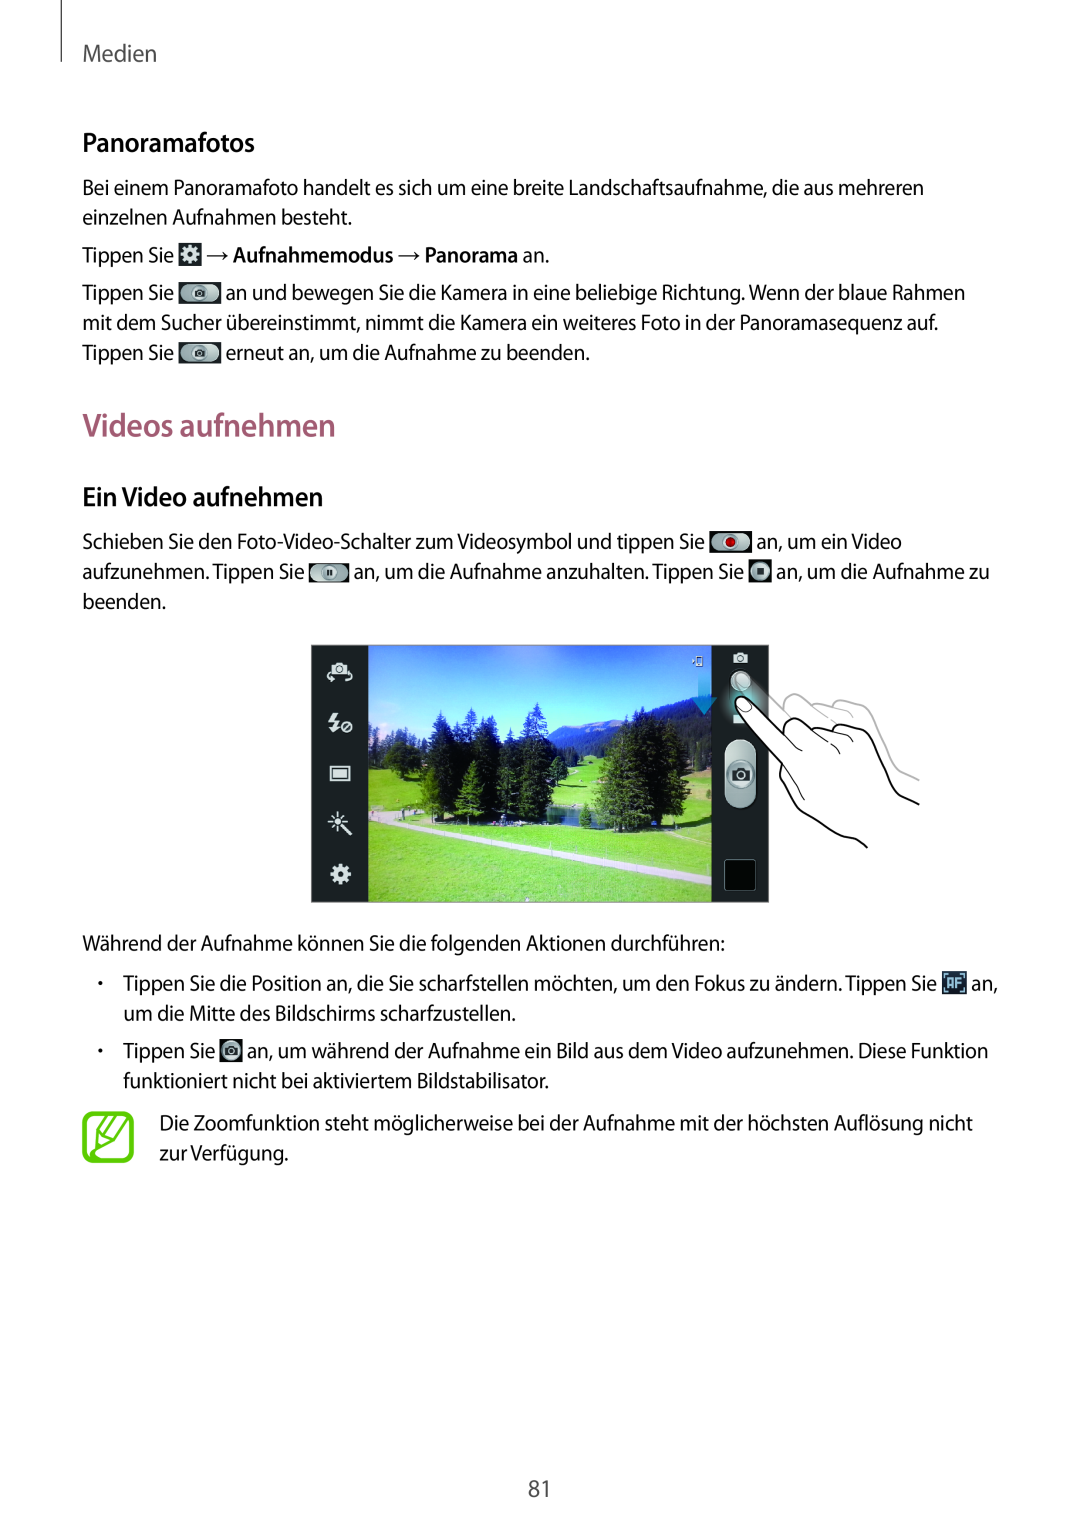 Samsung GT-N7100TADVIA manual Videos aufnehmen, Panoramafotos, Ein Video aufnehmen, Tippen Sie →Aufnahmemodus →Panorama an 